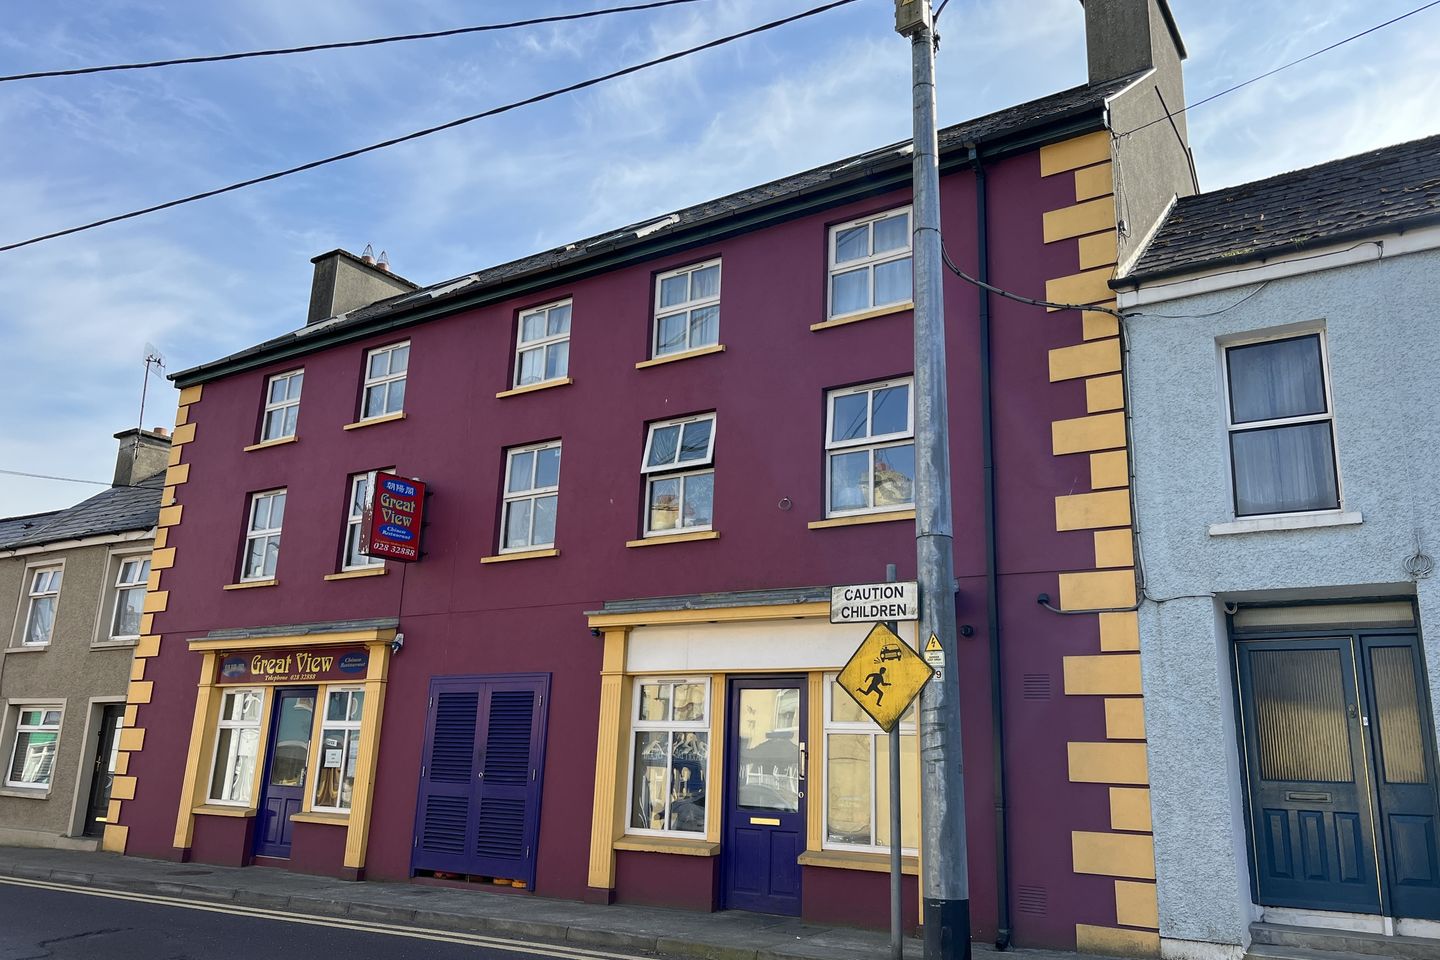 GREAT VIEW, Main Street, Drimoleague, Co. Cork